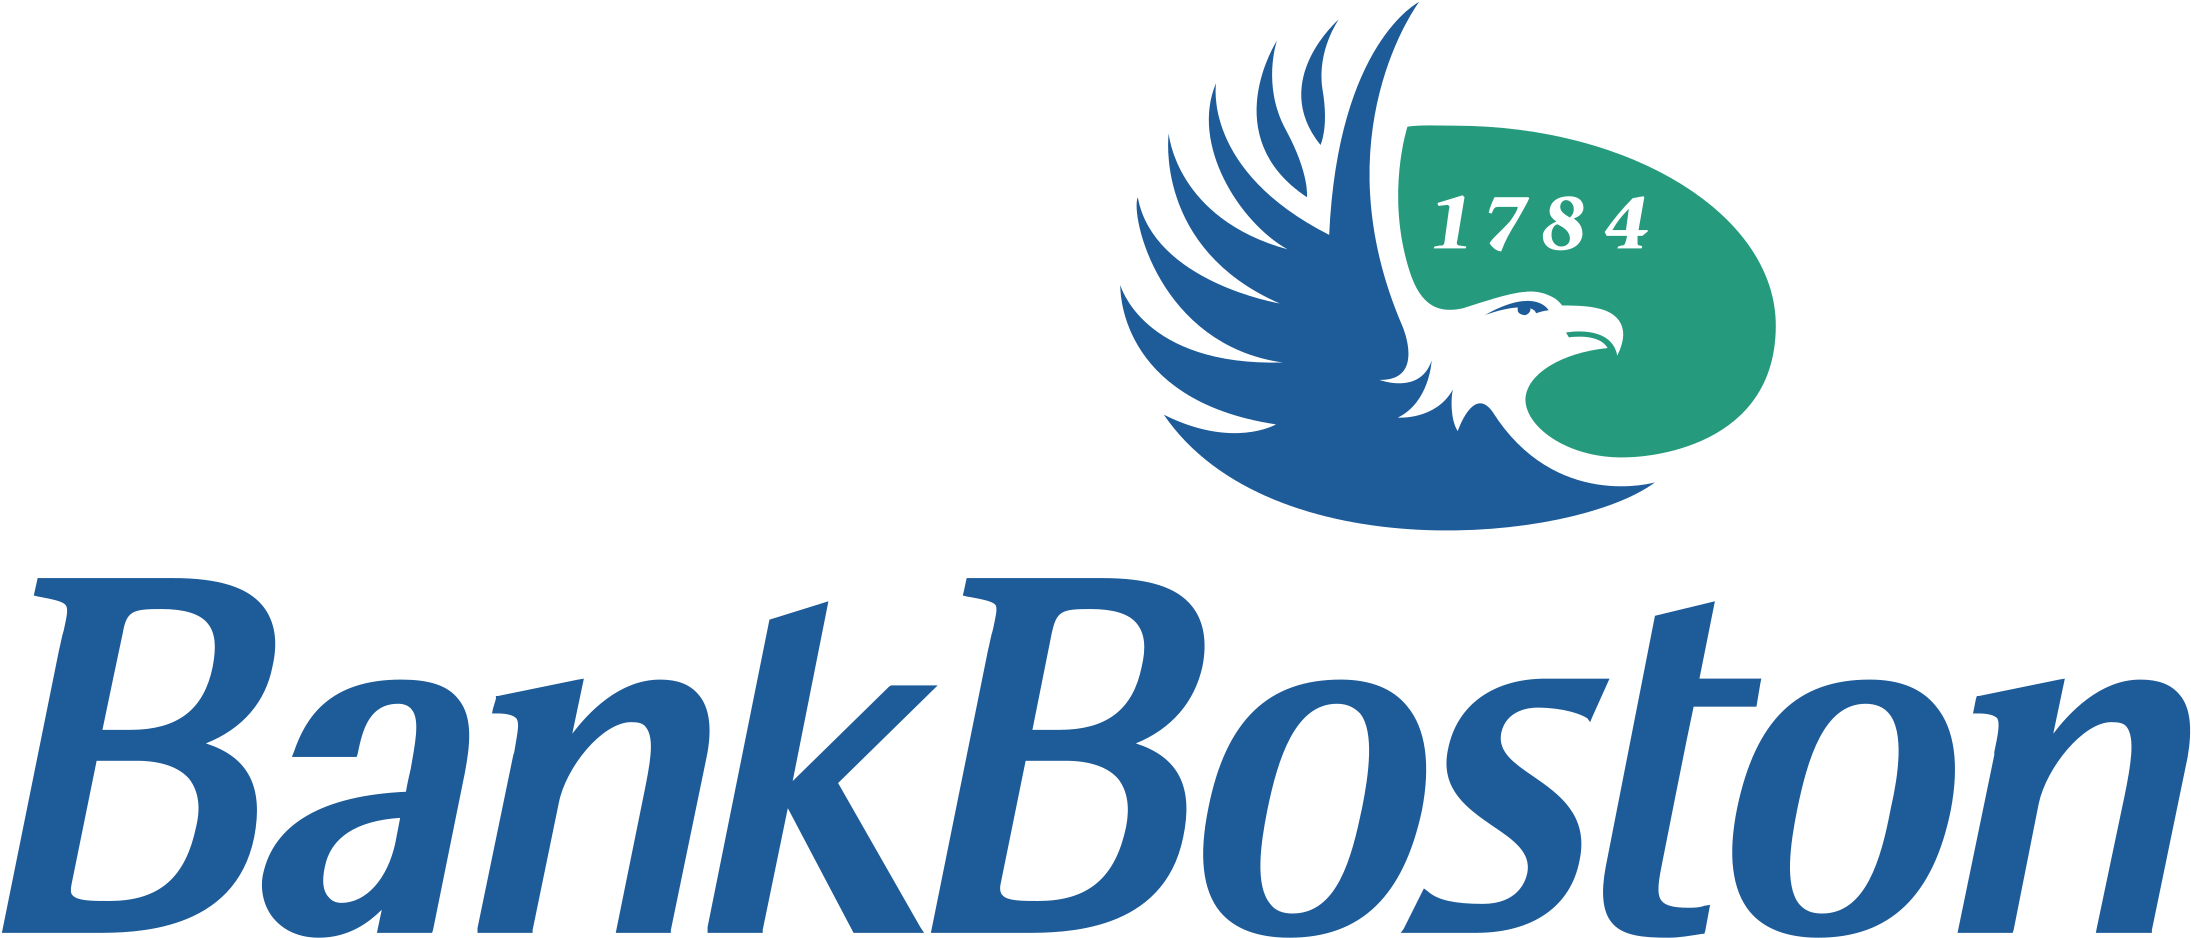 Bank Boston 02 Logo Png Transparent - Bank Boston Logo Png (2400x2400), Png Download